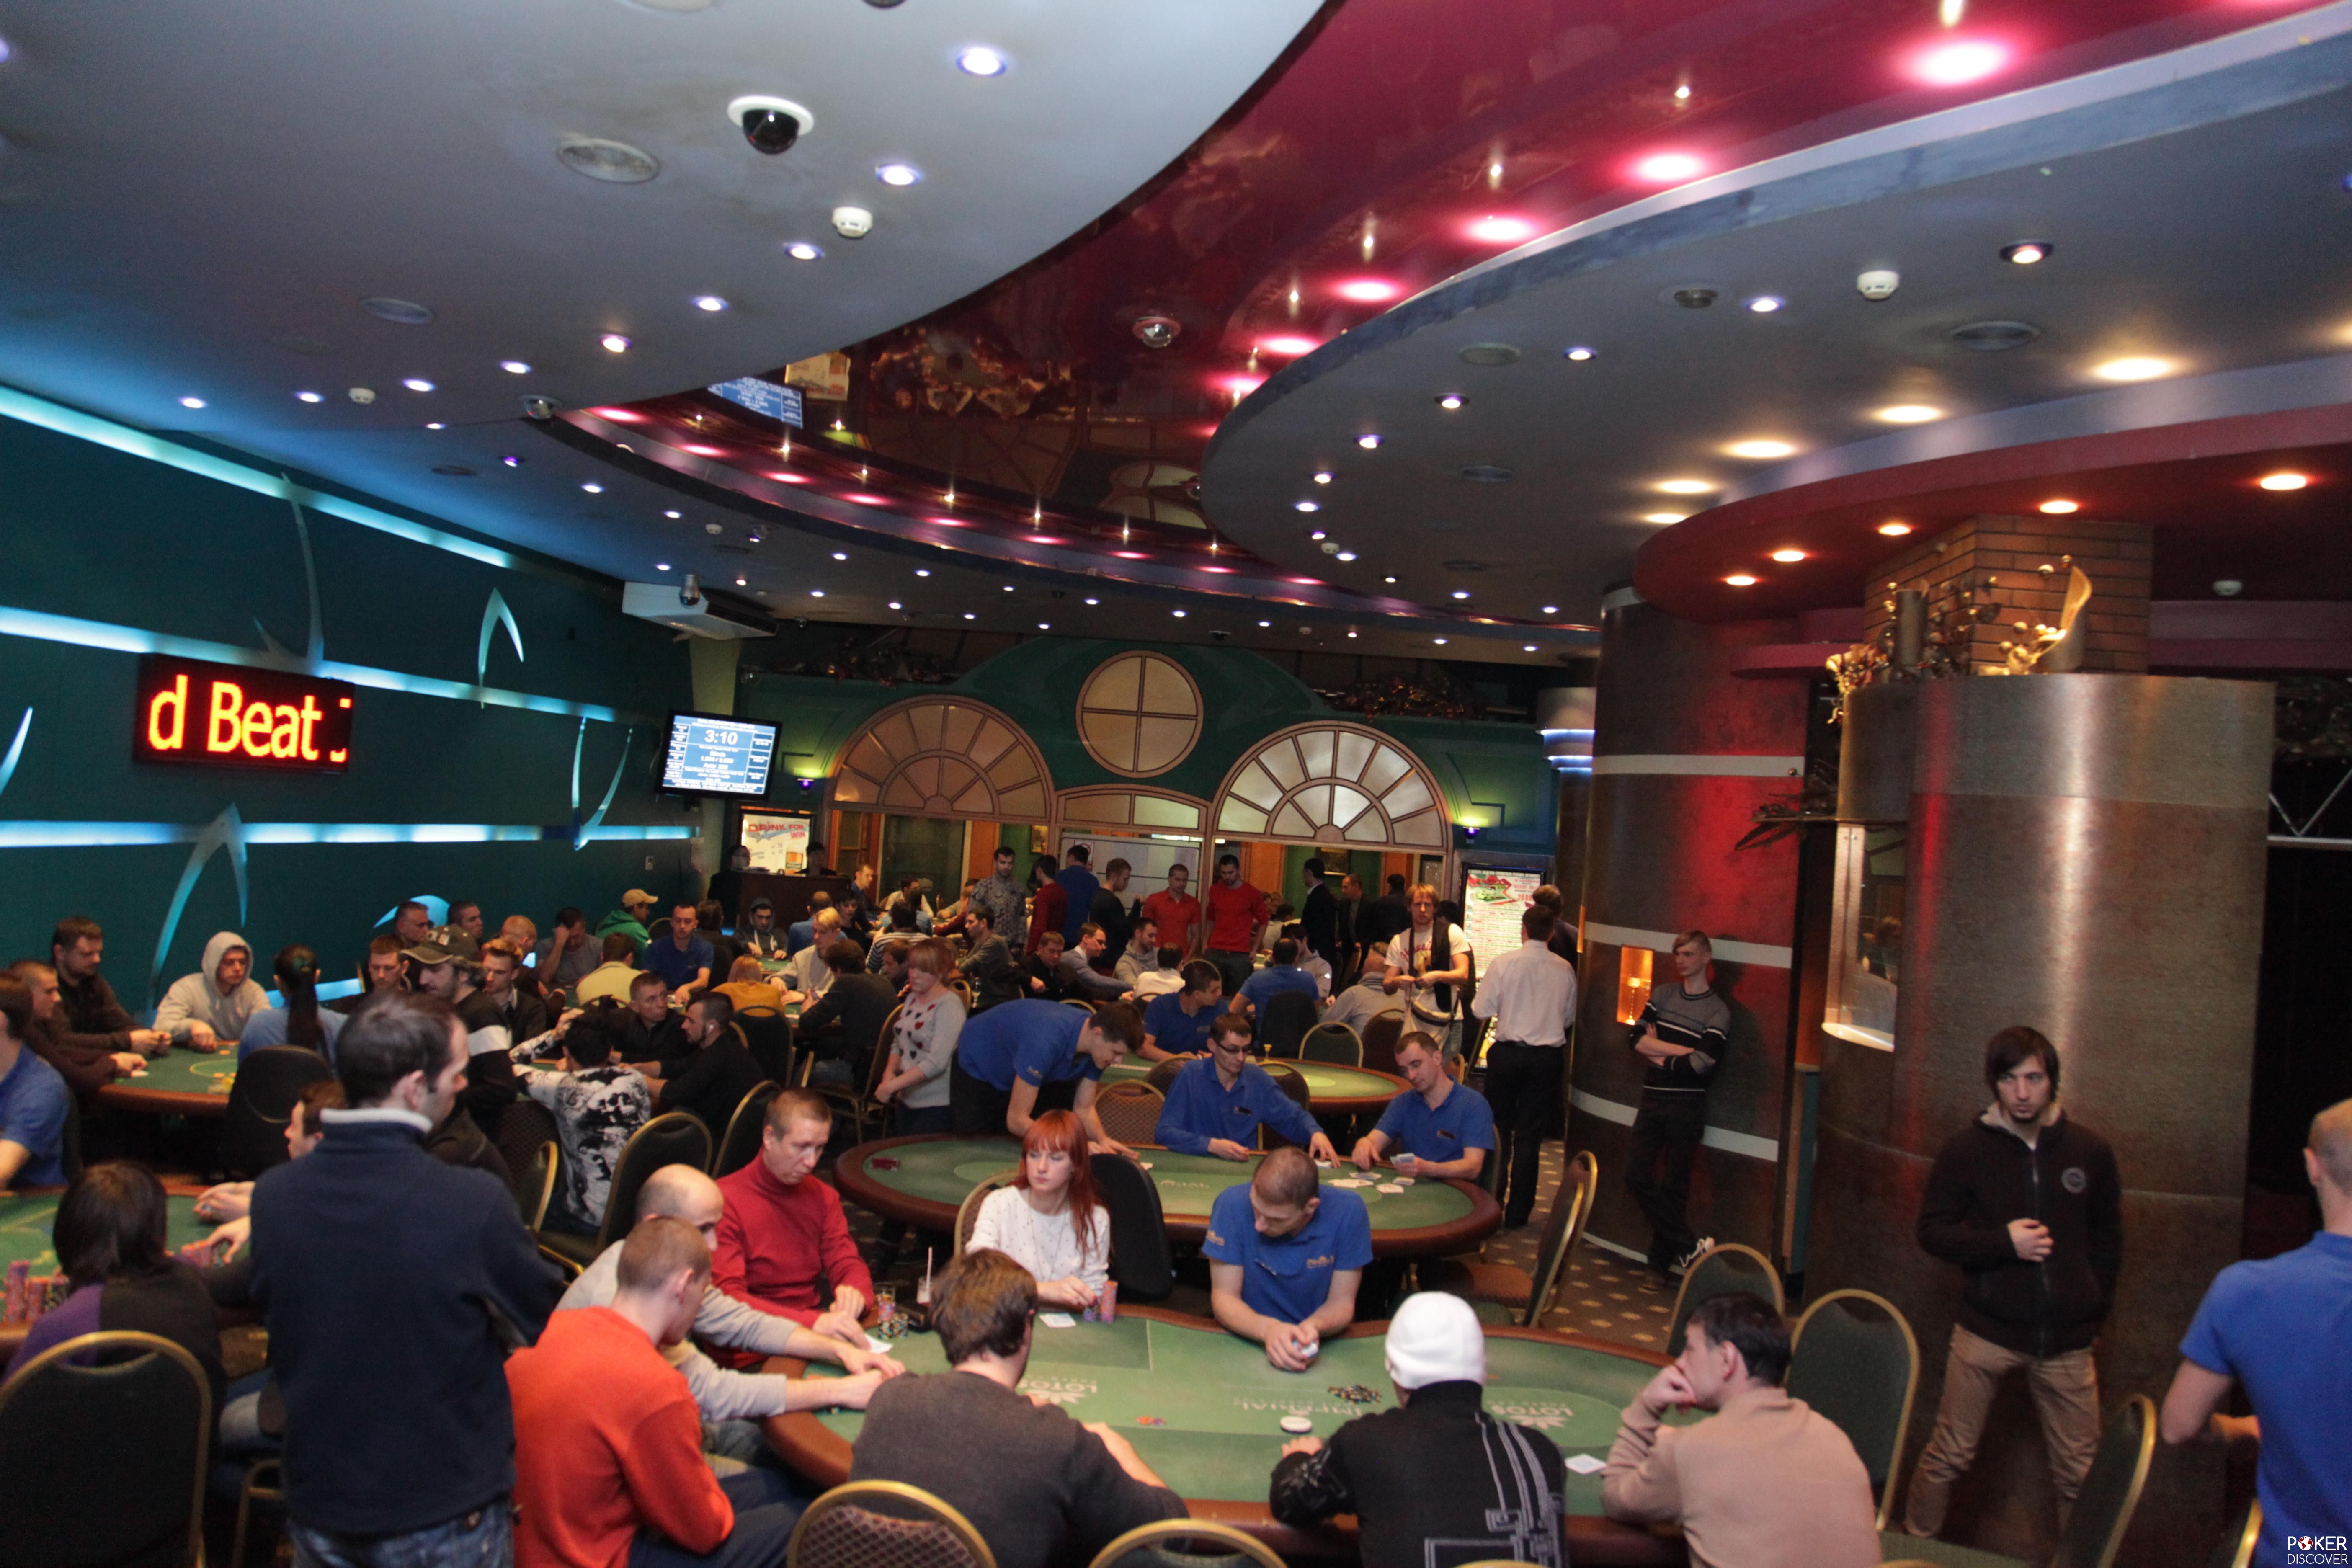 Eglinton Casino Poker Club